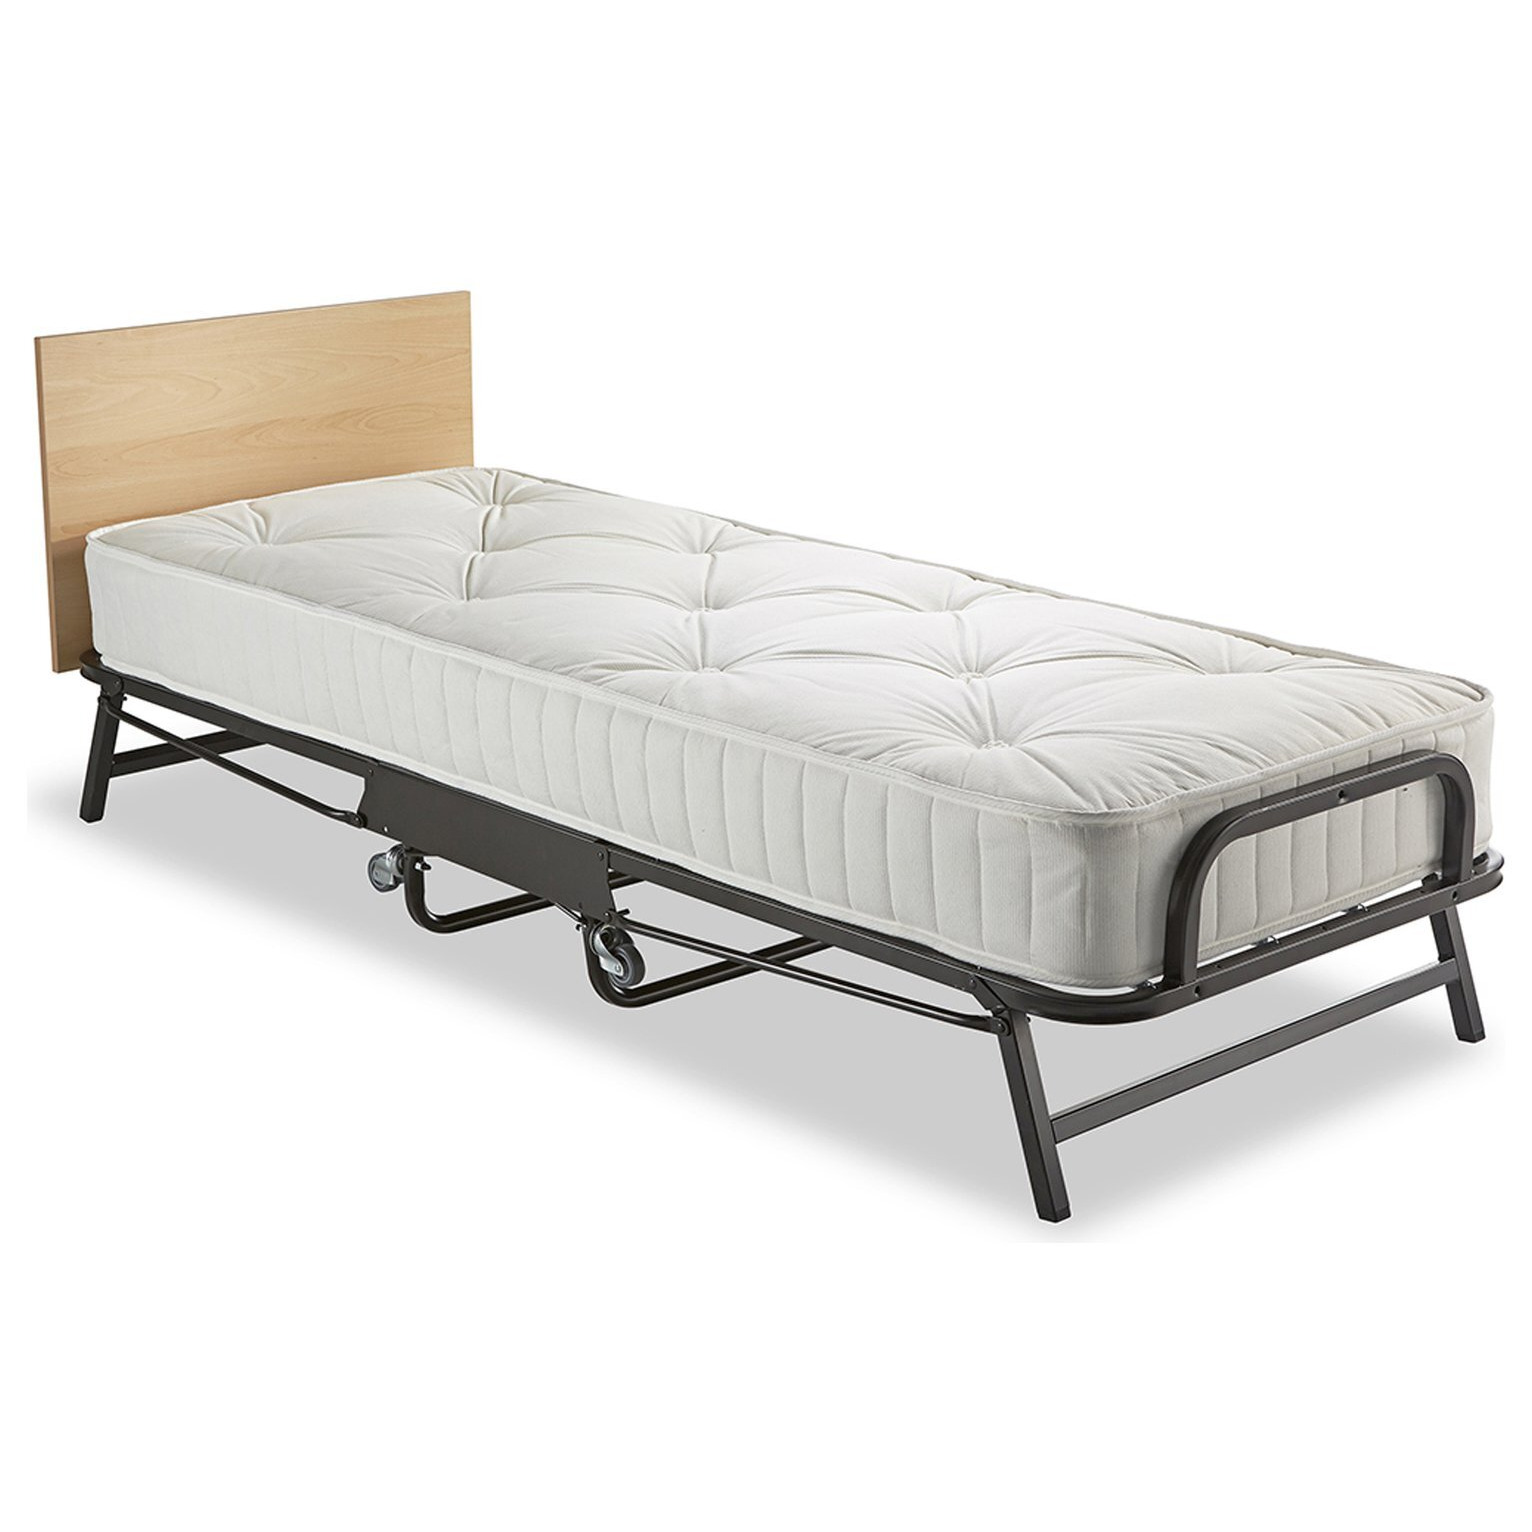 Jay-Be Crown Premier Folding Bed Deep Sprung Mattress-Single - image 1